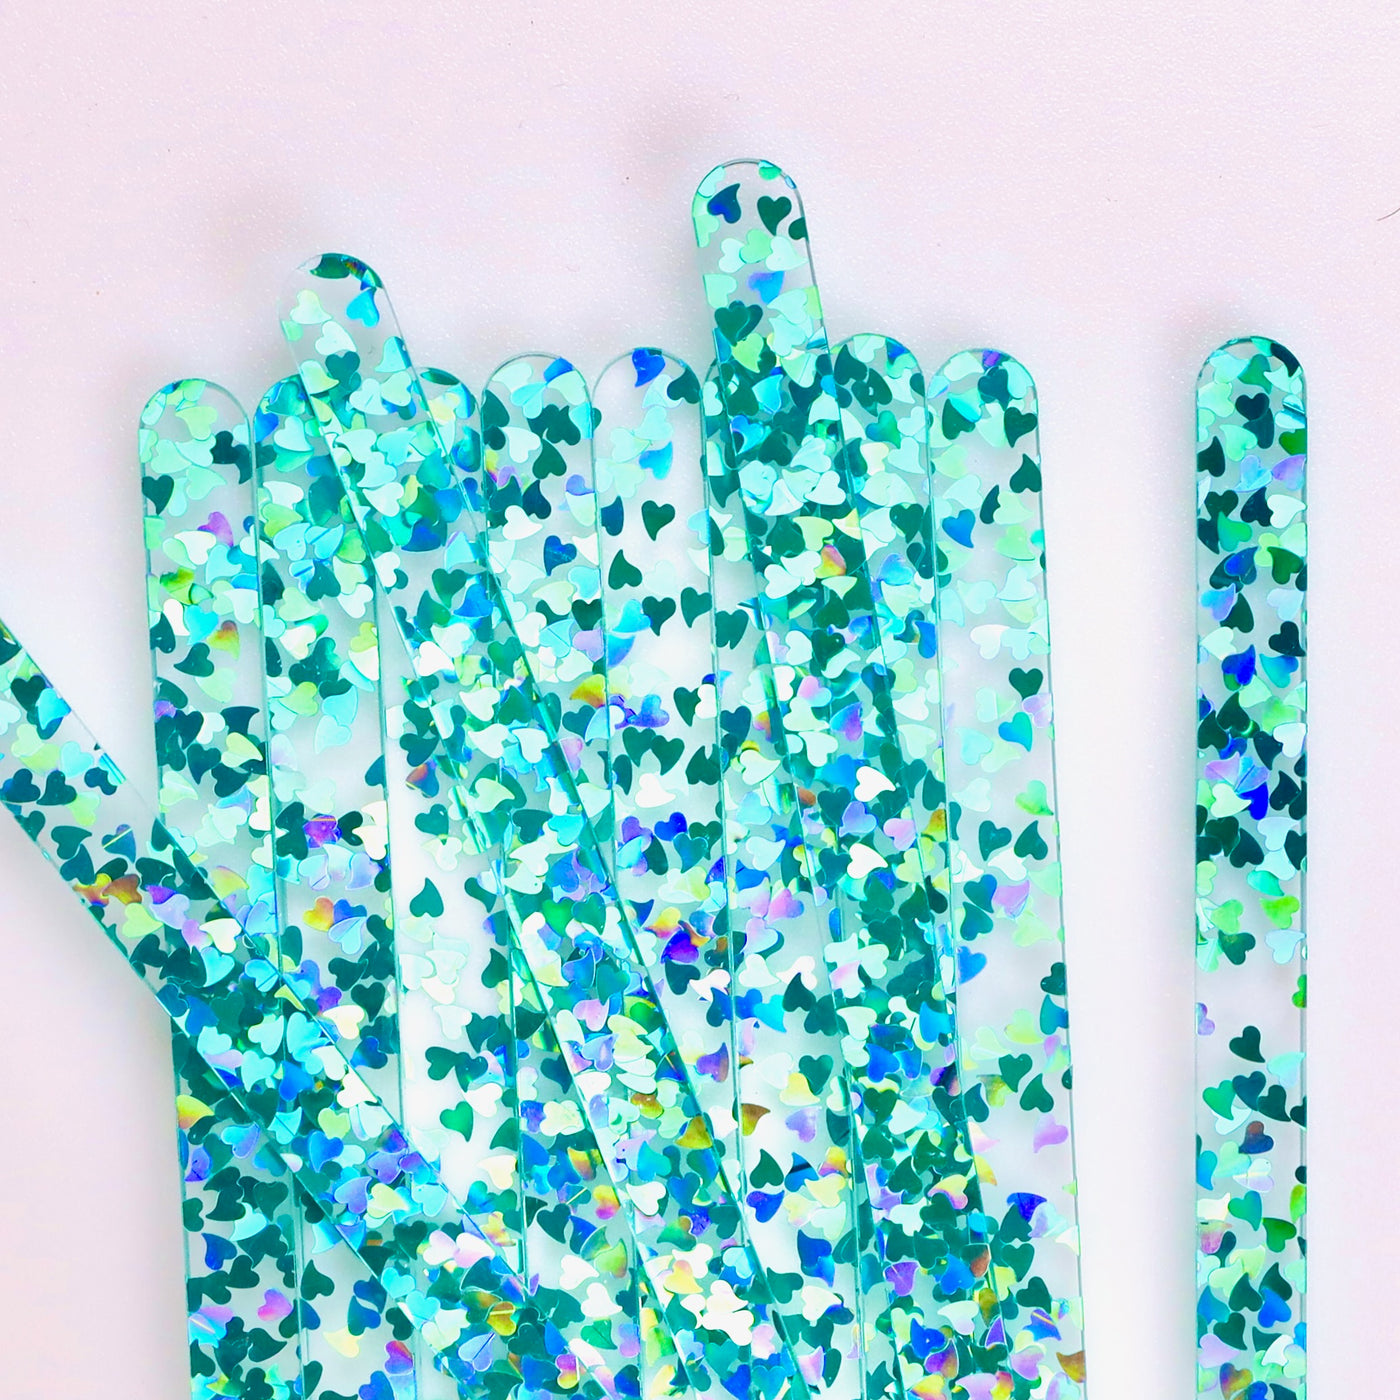 24 Teal / Blue Heart Popsicle Sticks - The Sugar Art, Inc.